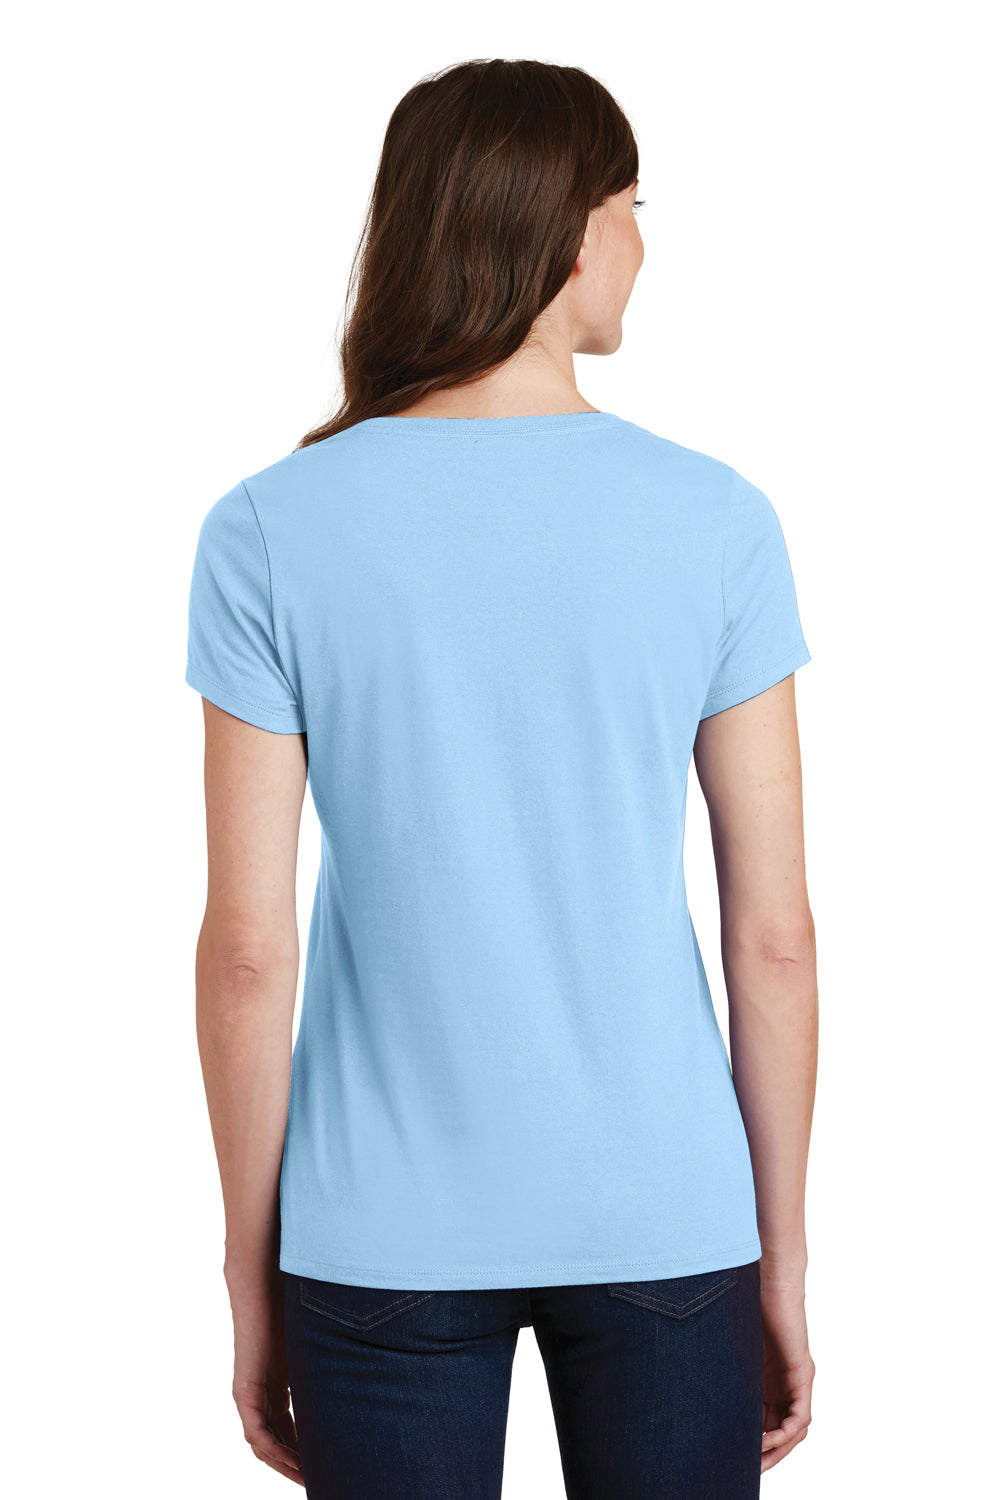 Port & Company LPC450V Womens Fan Favorite Short Sleeve V-Neck T-Shirt Light Blue Back